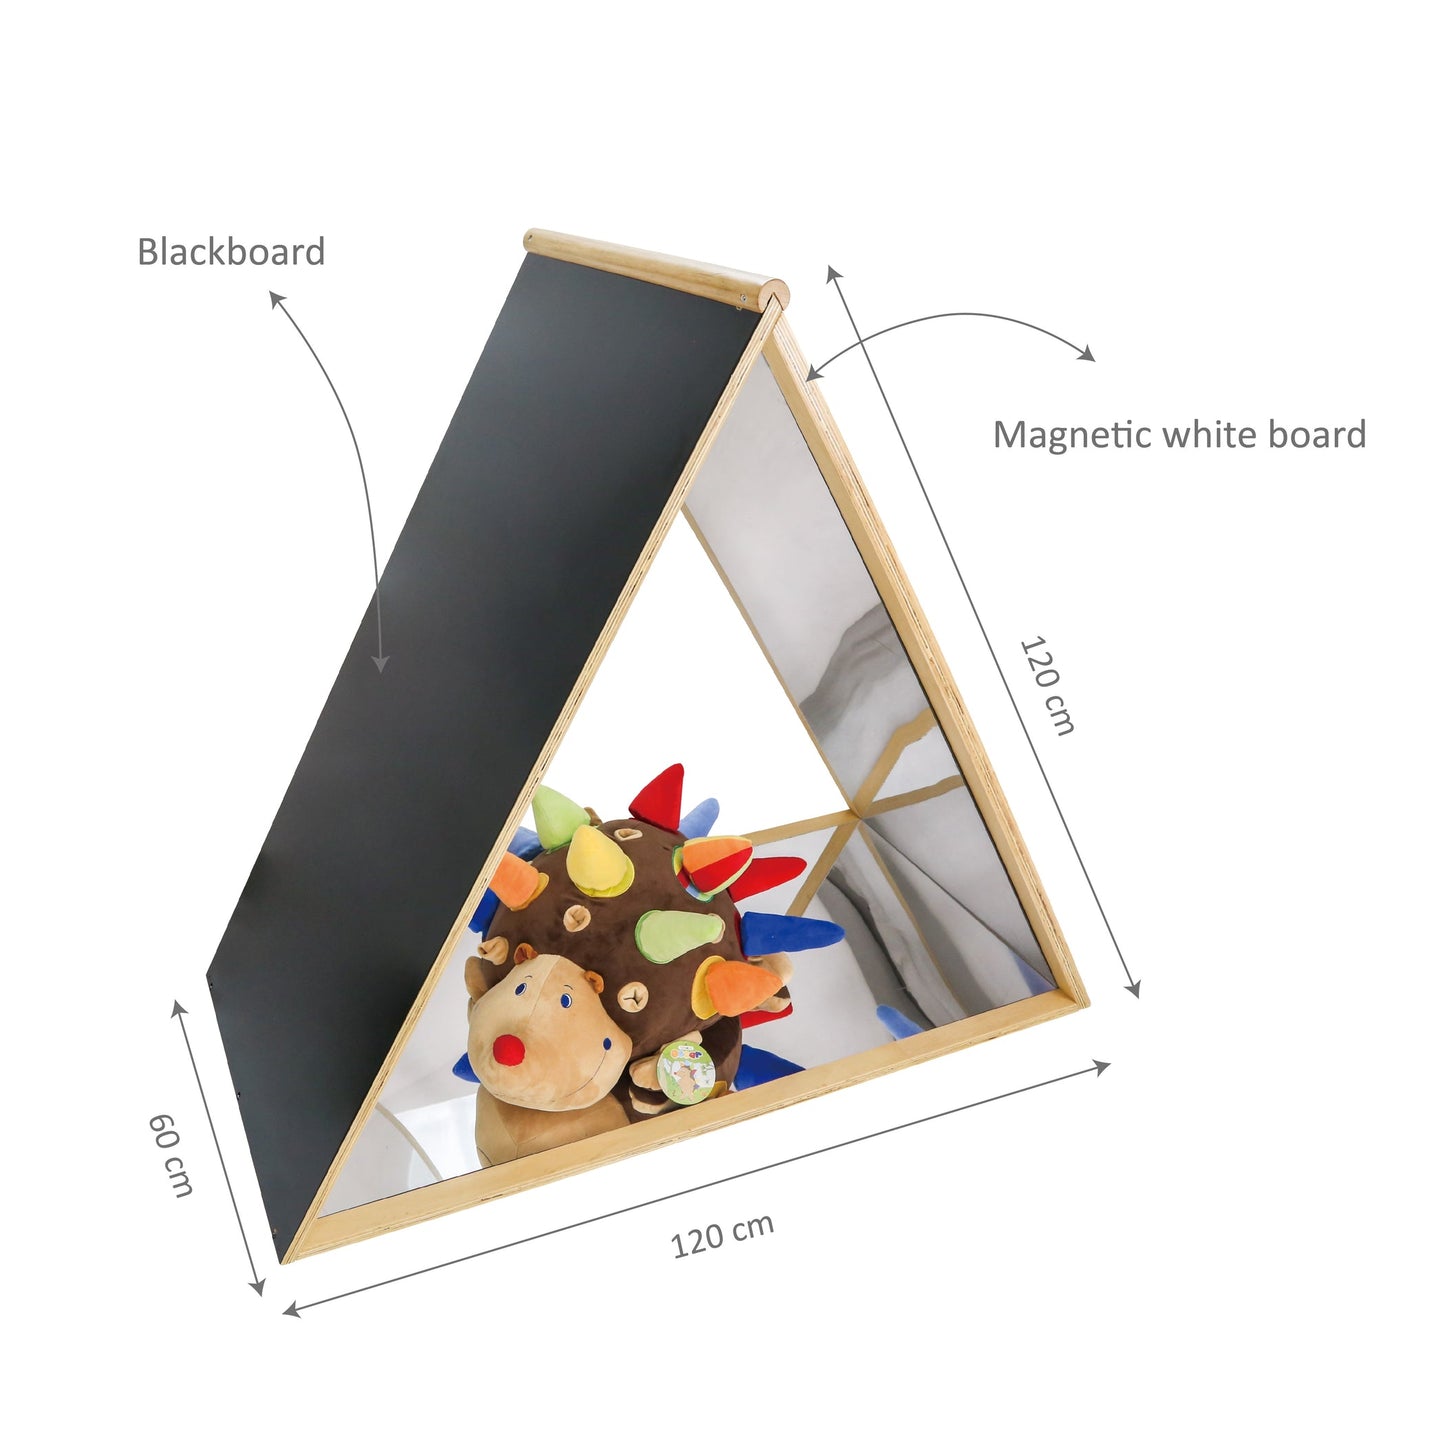 Triangular Play Mirror With Whiteboard and Blackboard  多功能 亞克力三面鏡附有黑板和白板